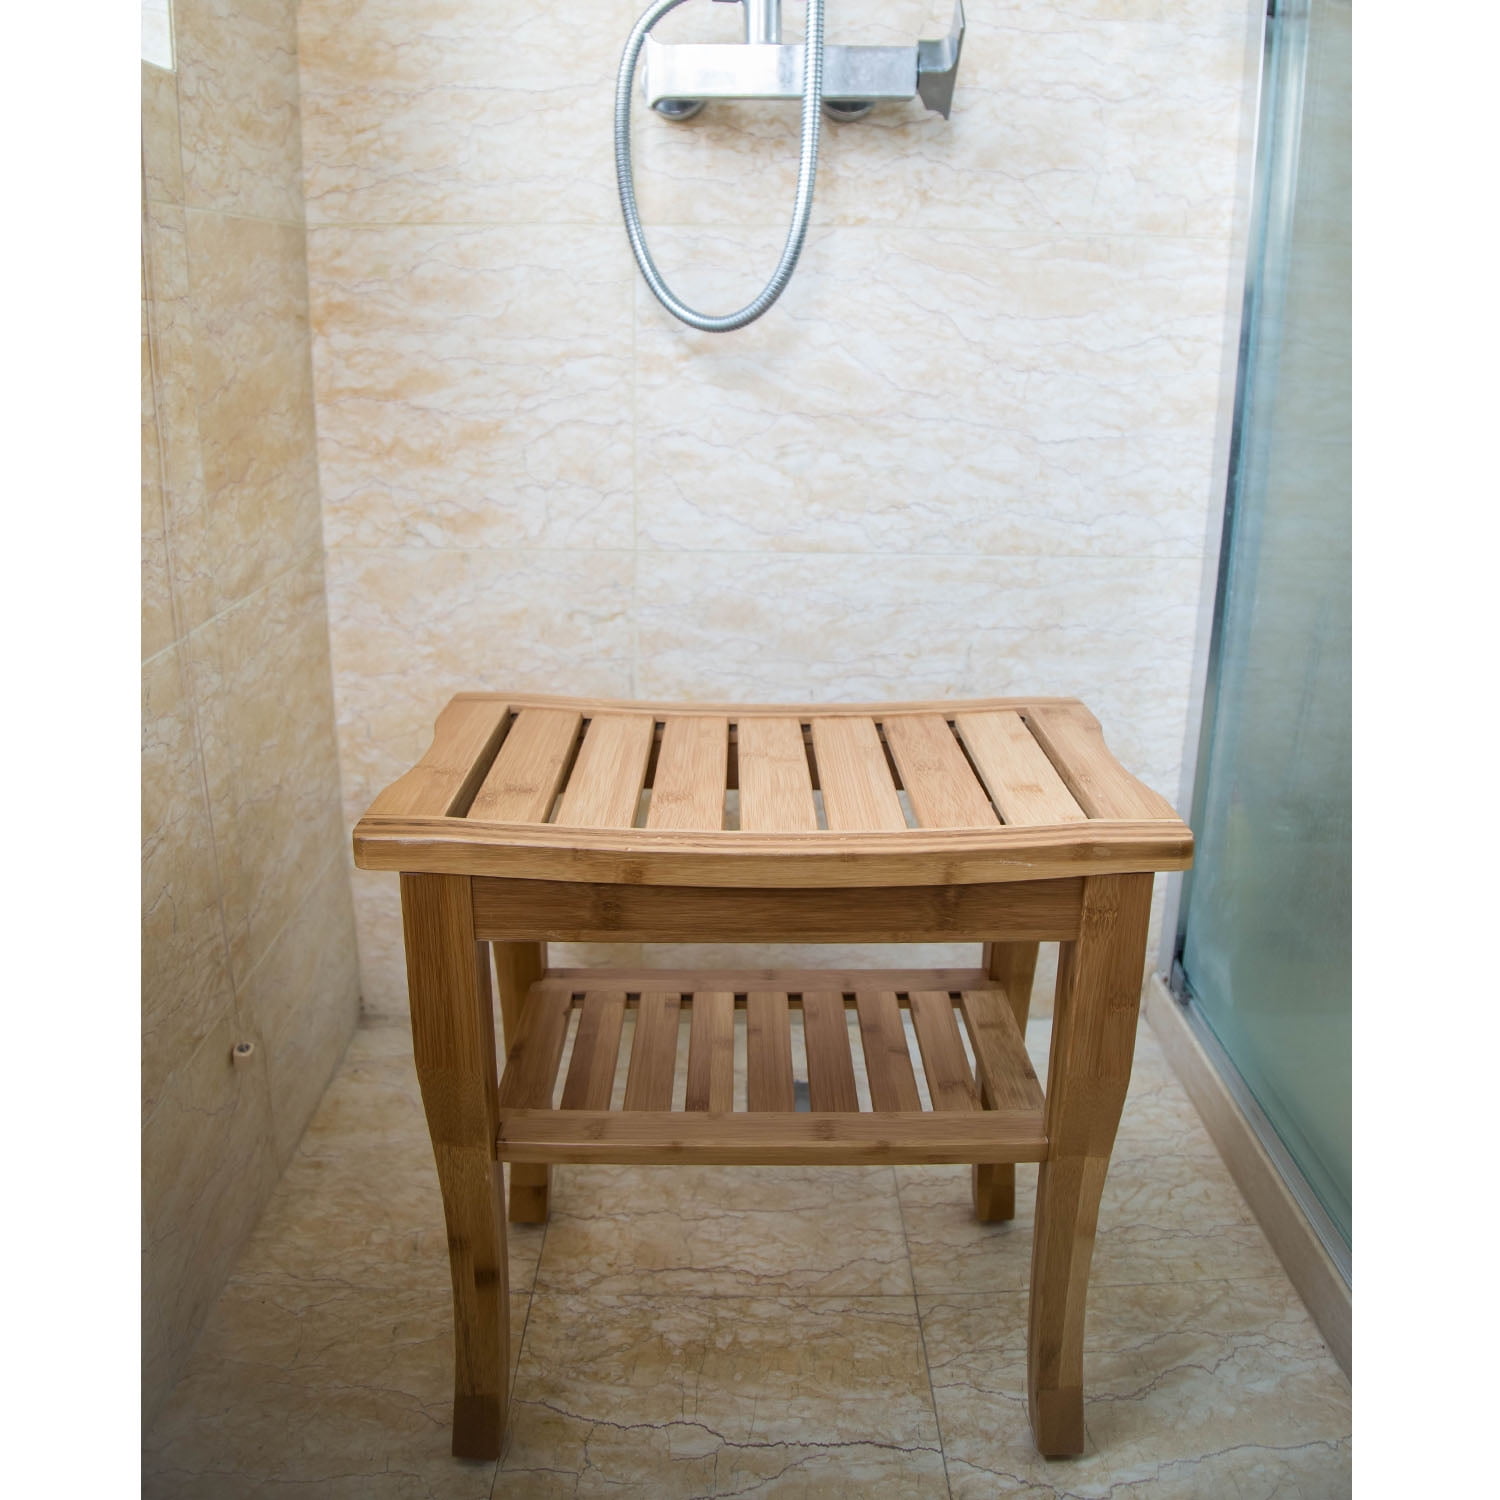 Natural Bamboo Anti-slip Shower Bench Seat Bathroom Spa Bath Organizer Stool W/Storage Shelf 60x33x47cm 